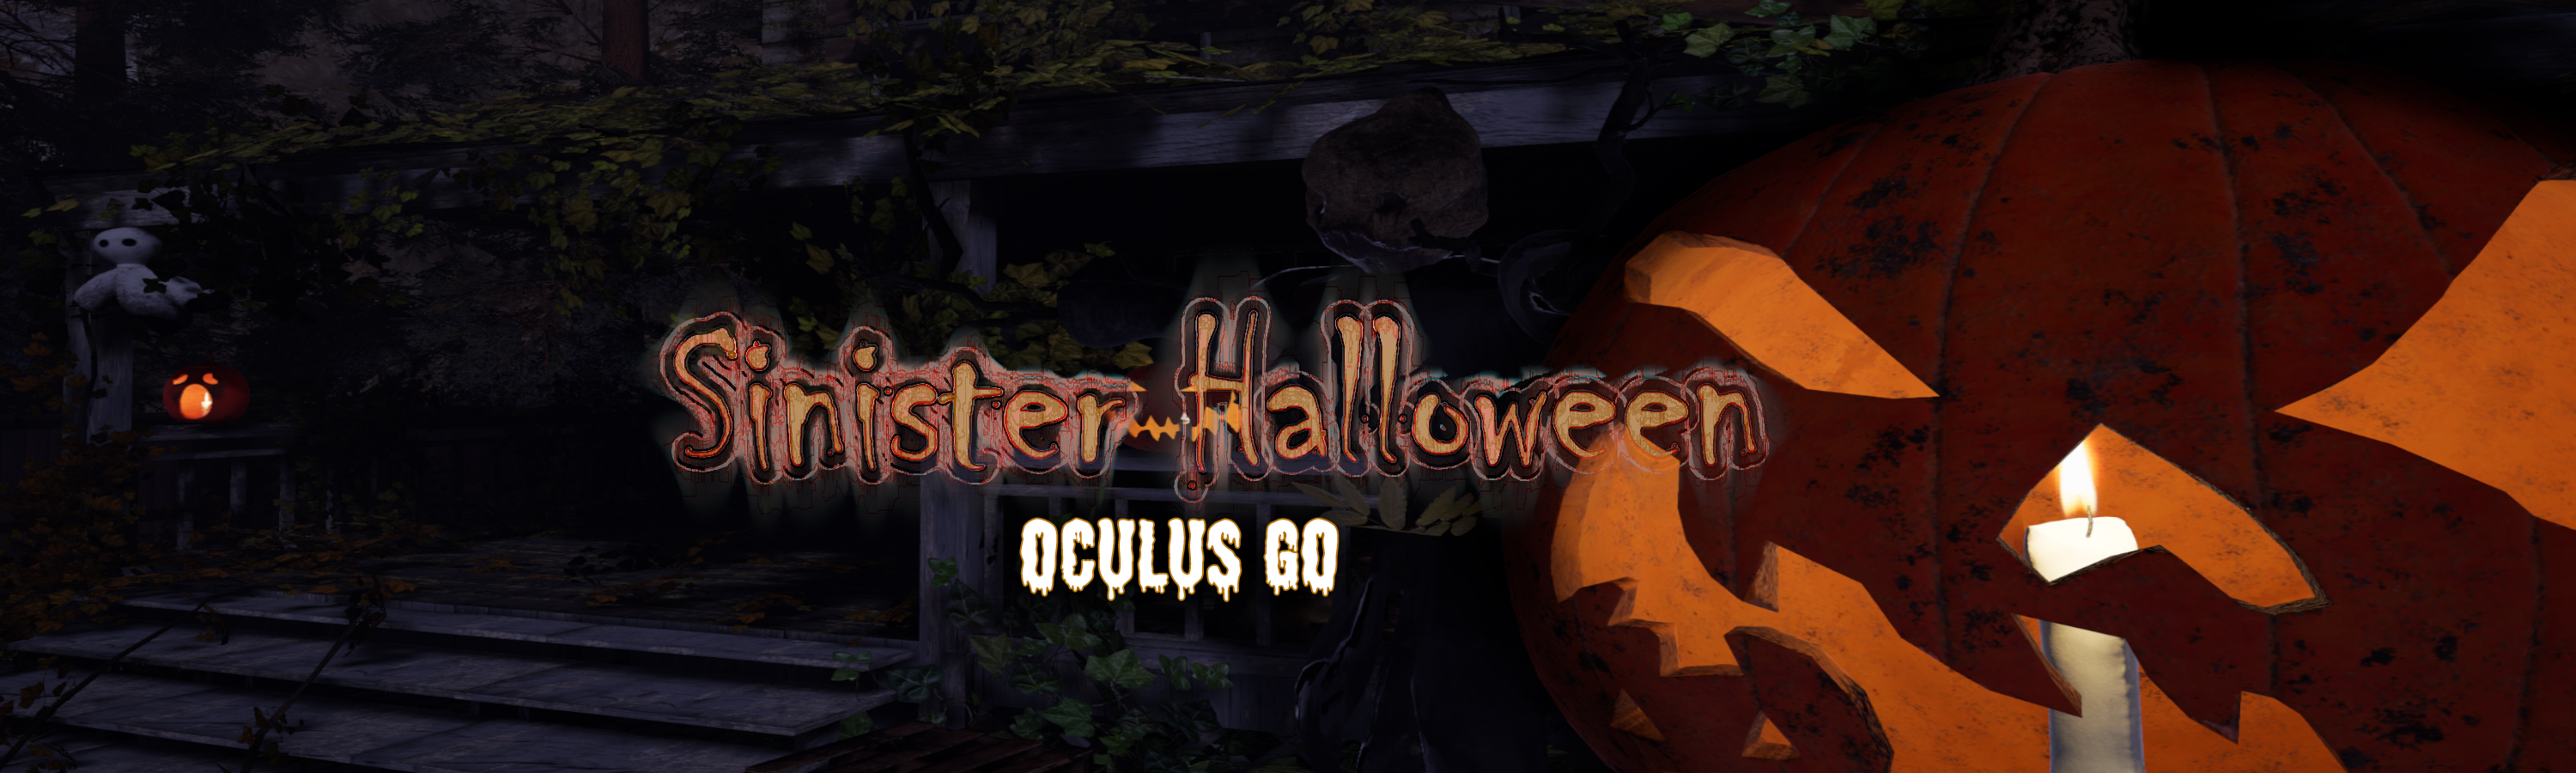 Sinister Halloween Oculus Go